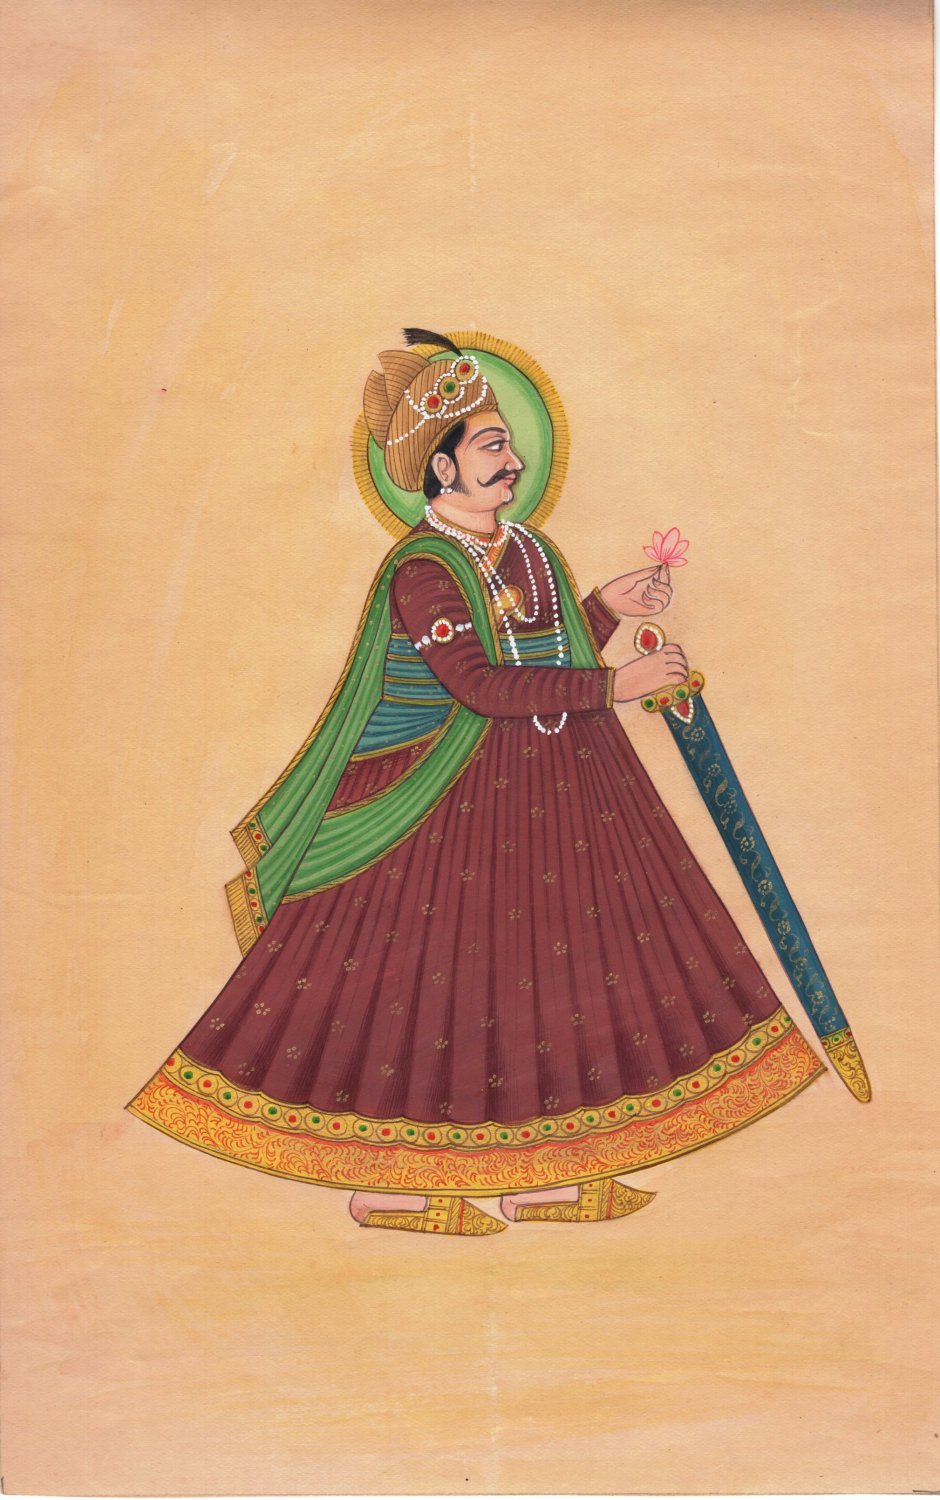 Maharajah Portrait Art Handmade Indian Miniature Rajasthani Royalty Painting